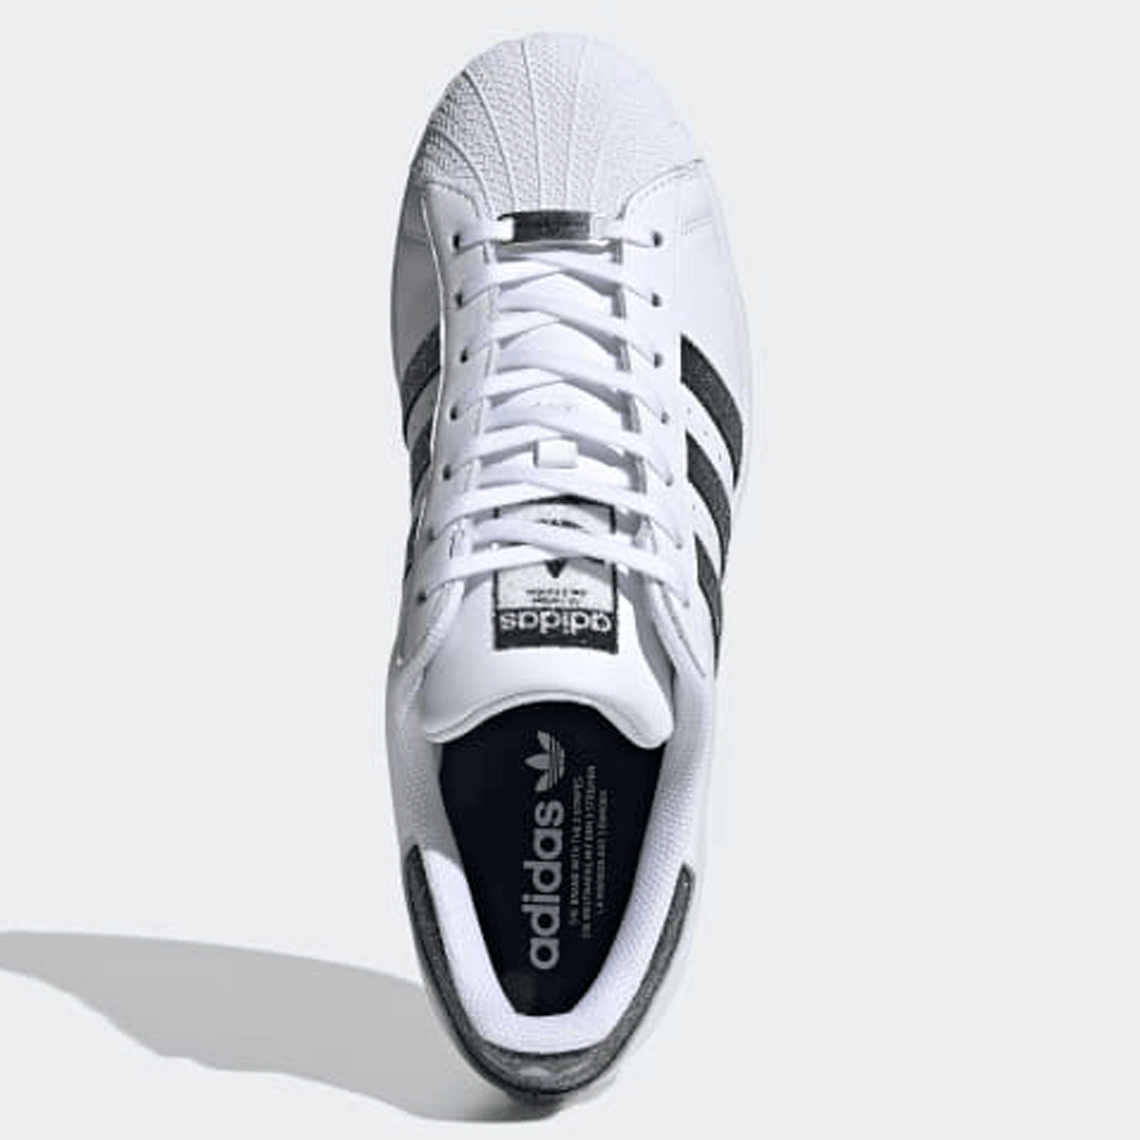 Swarovski Adidas Superstar Fx7480 1